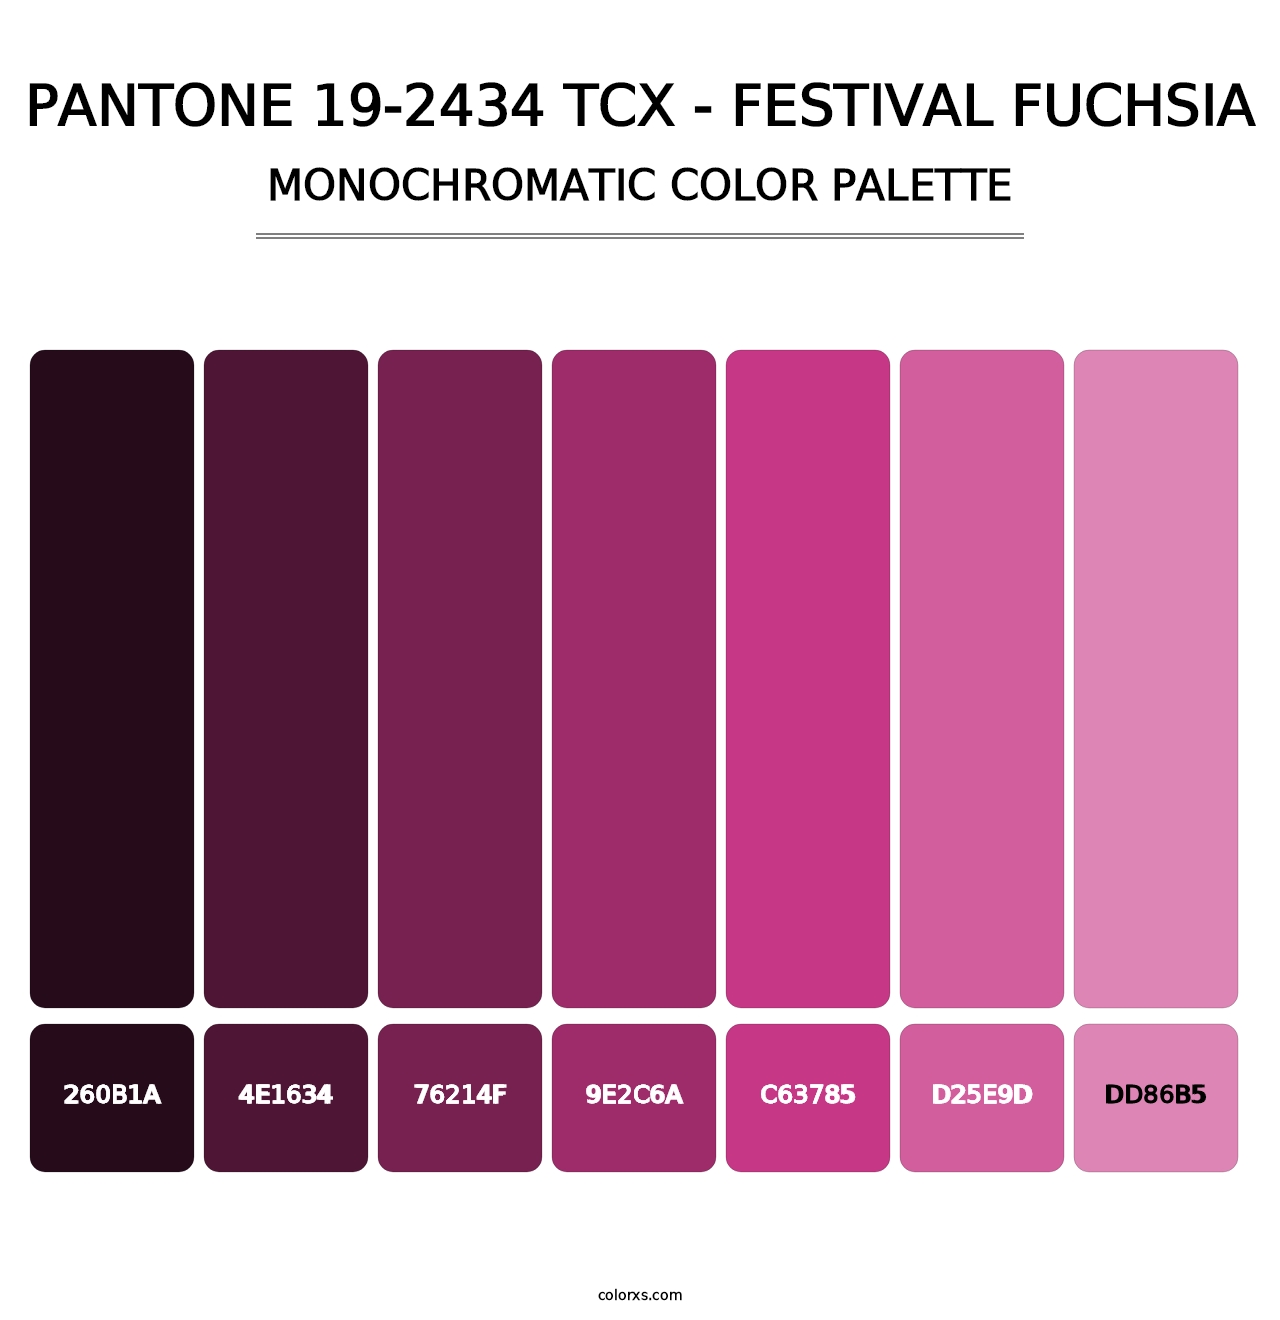 PANTONE 19-2434 TCX - Festival Fuchsia - Monochromatic Color Palette